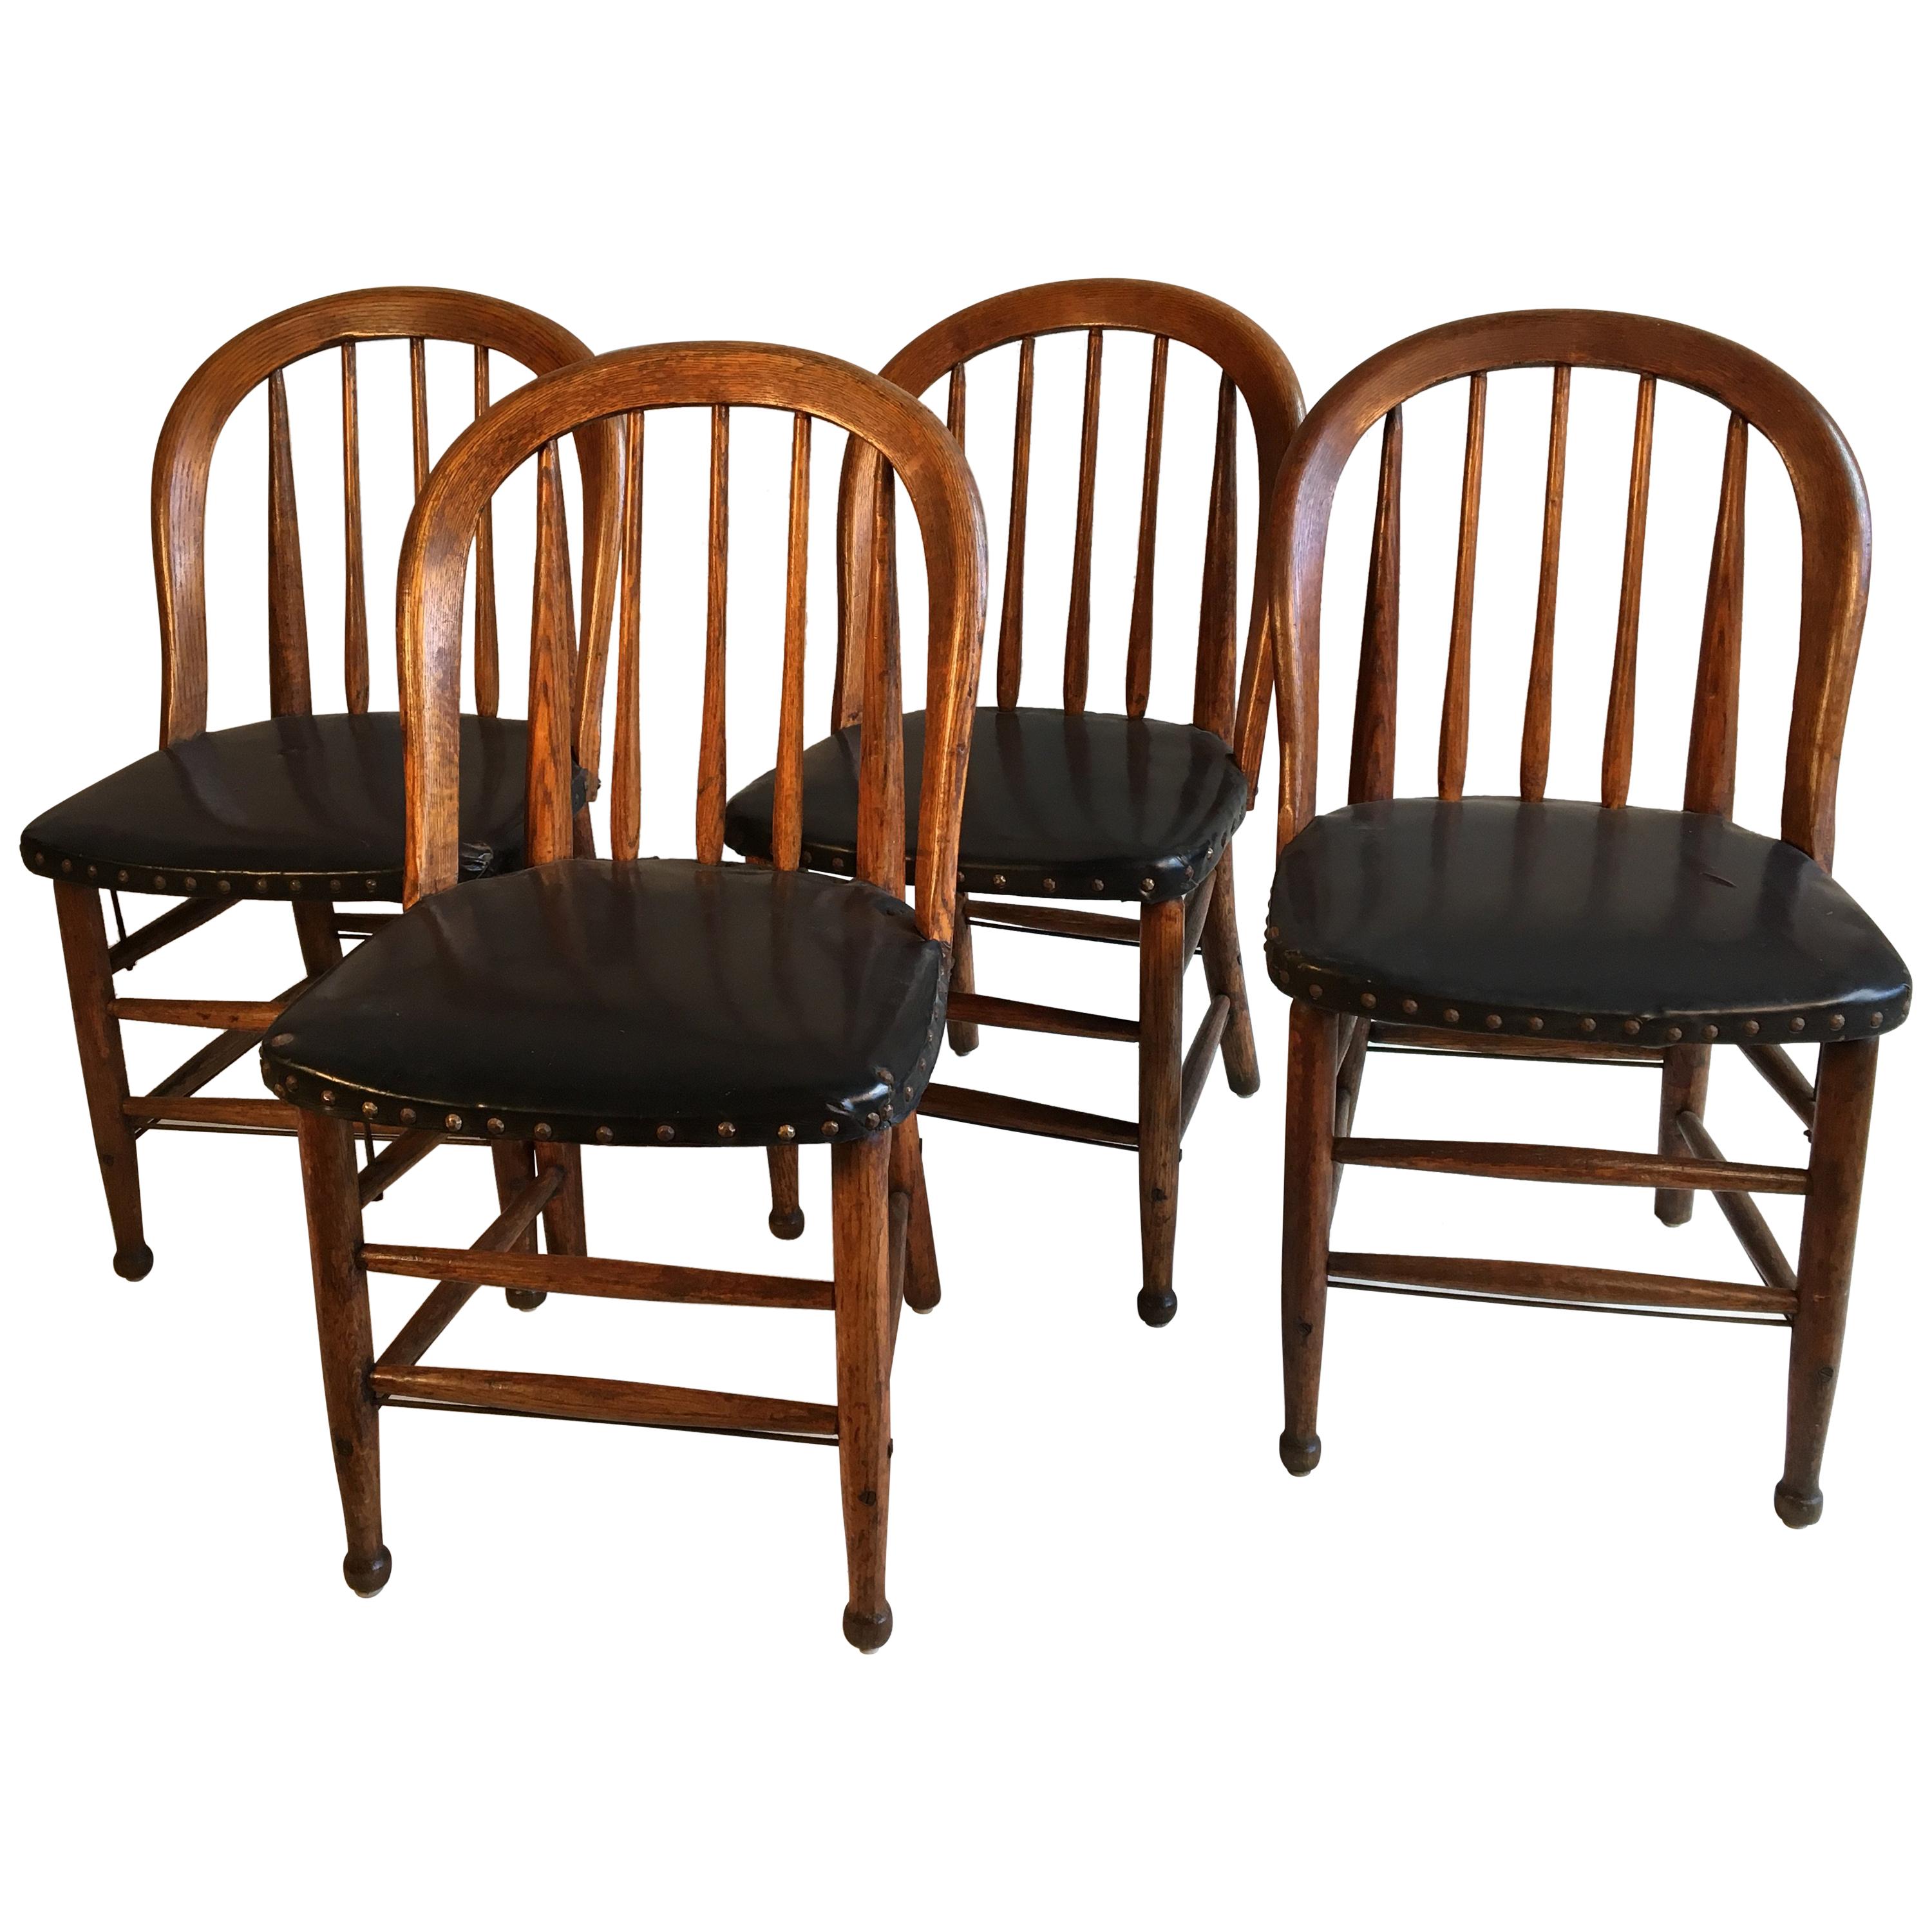 Set of 4 Oak Barrel-Back Chairs, circa 1880